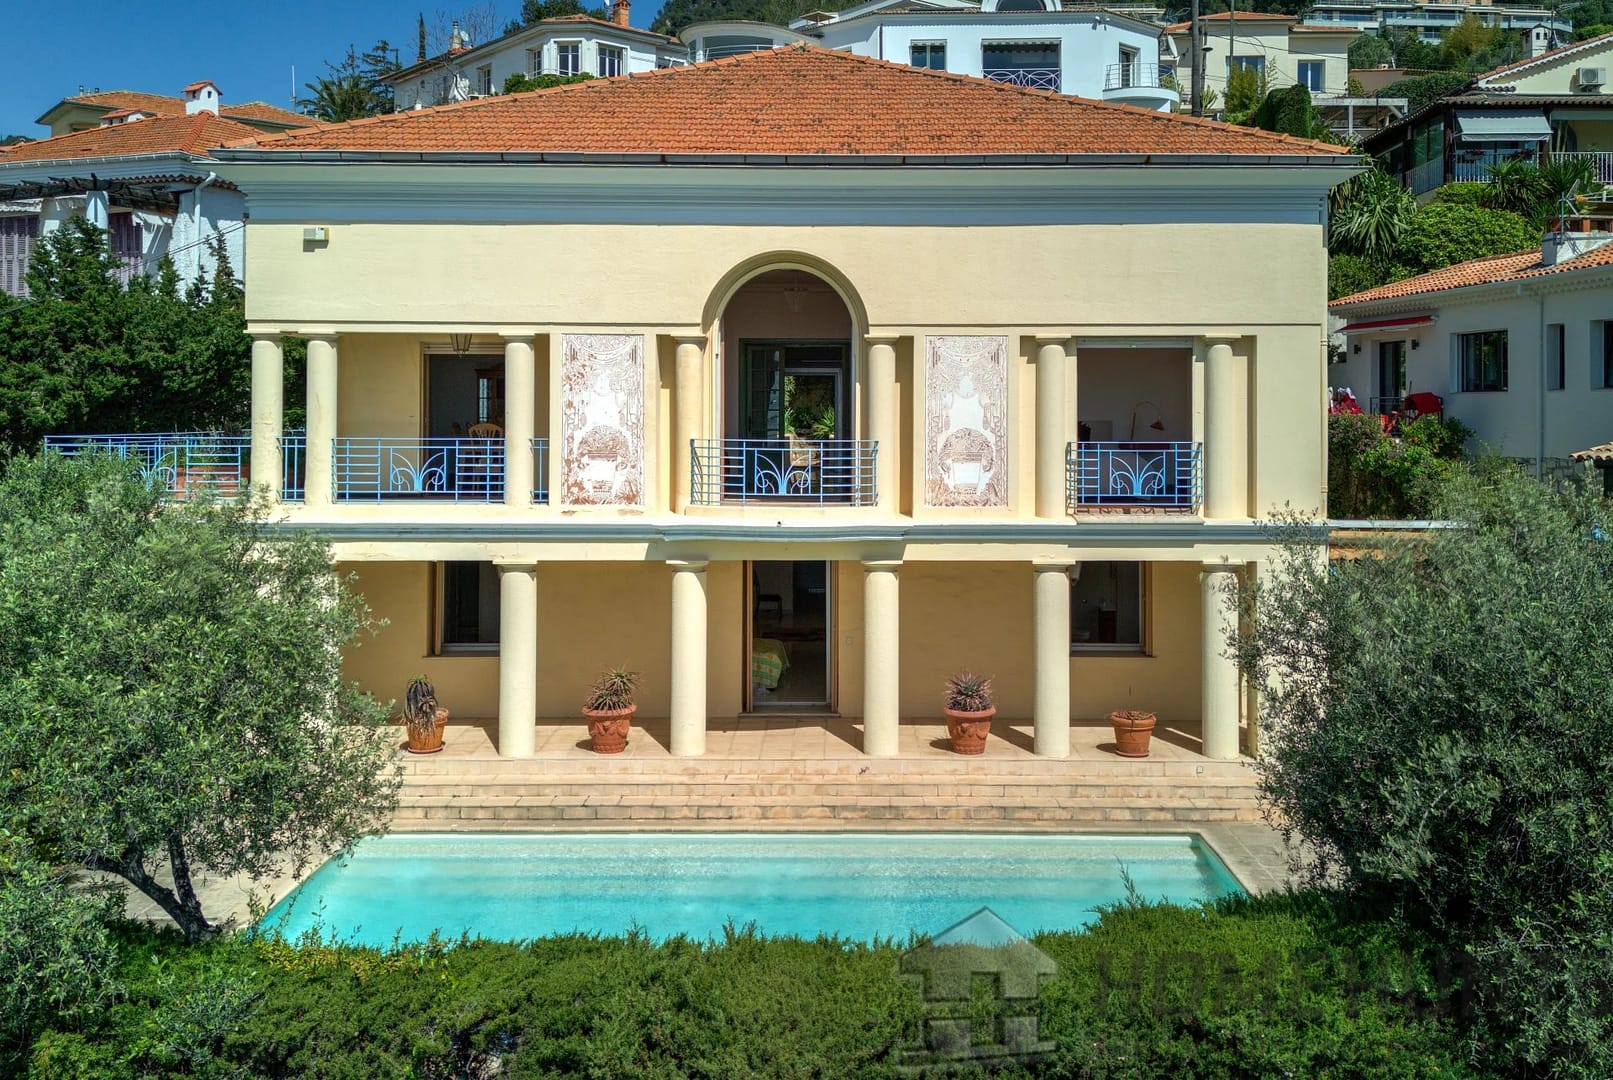 6 Bedroom Villa/House in Nice - Mont Boron 2